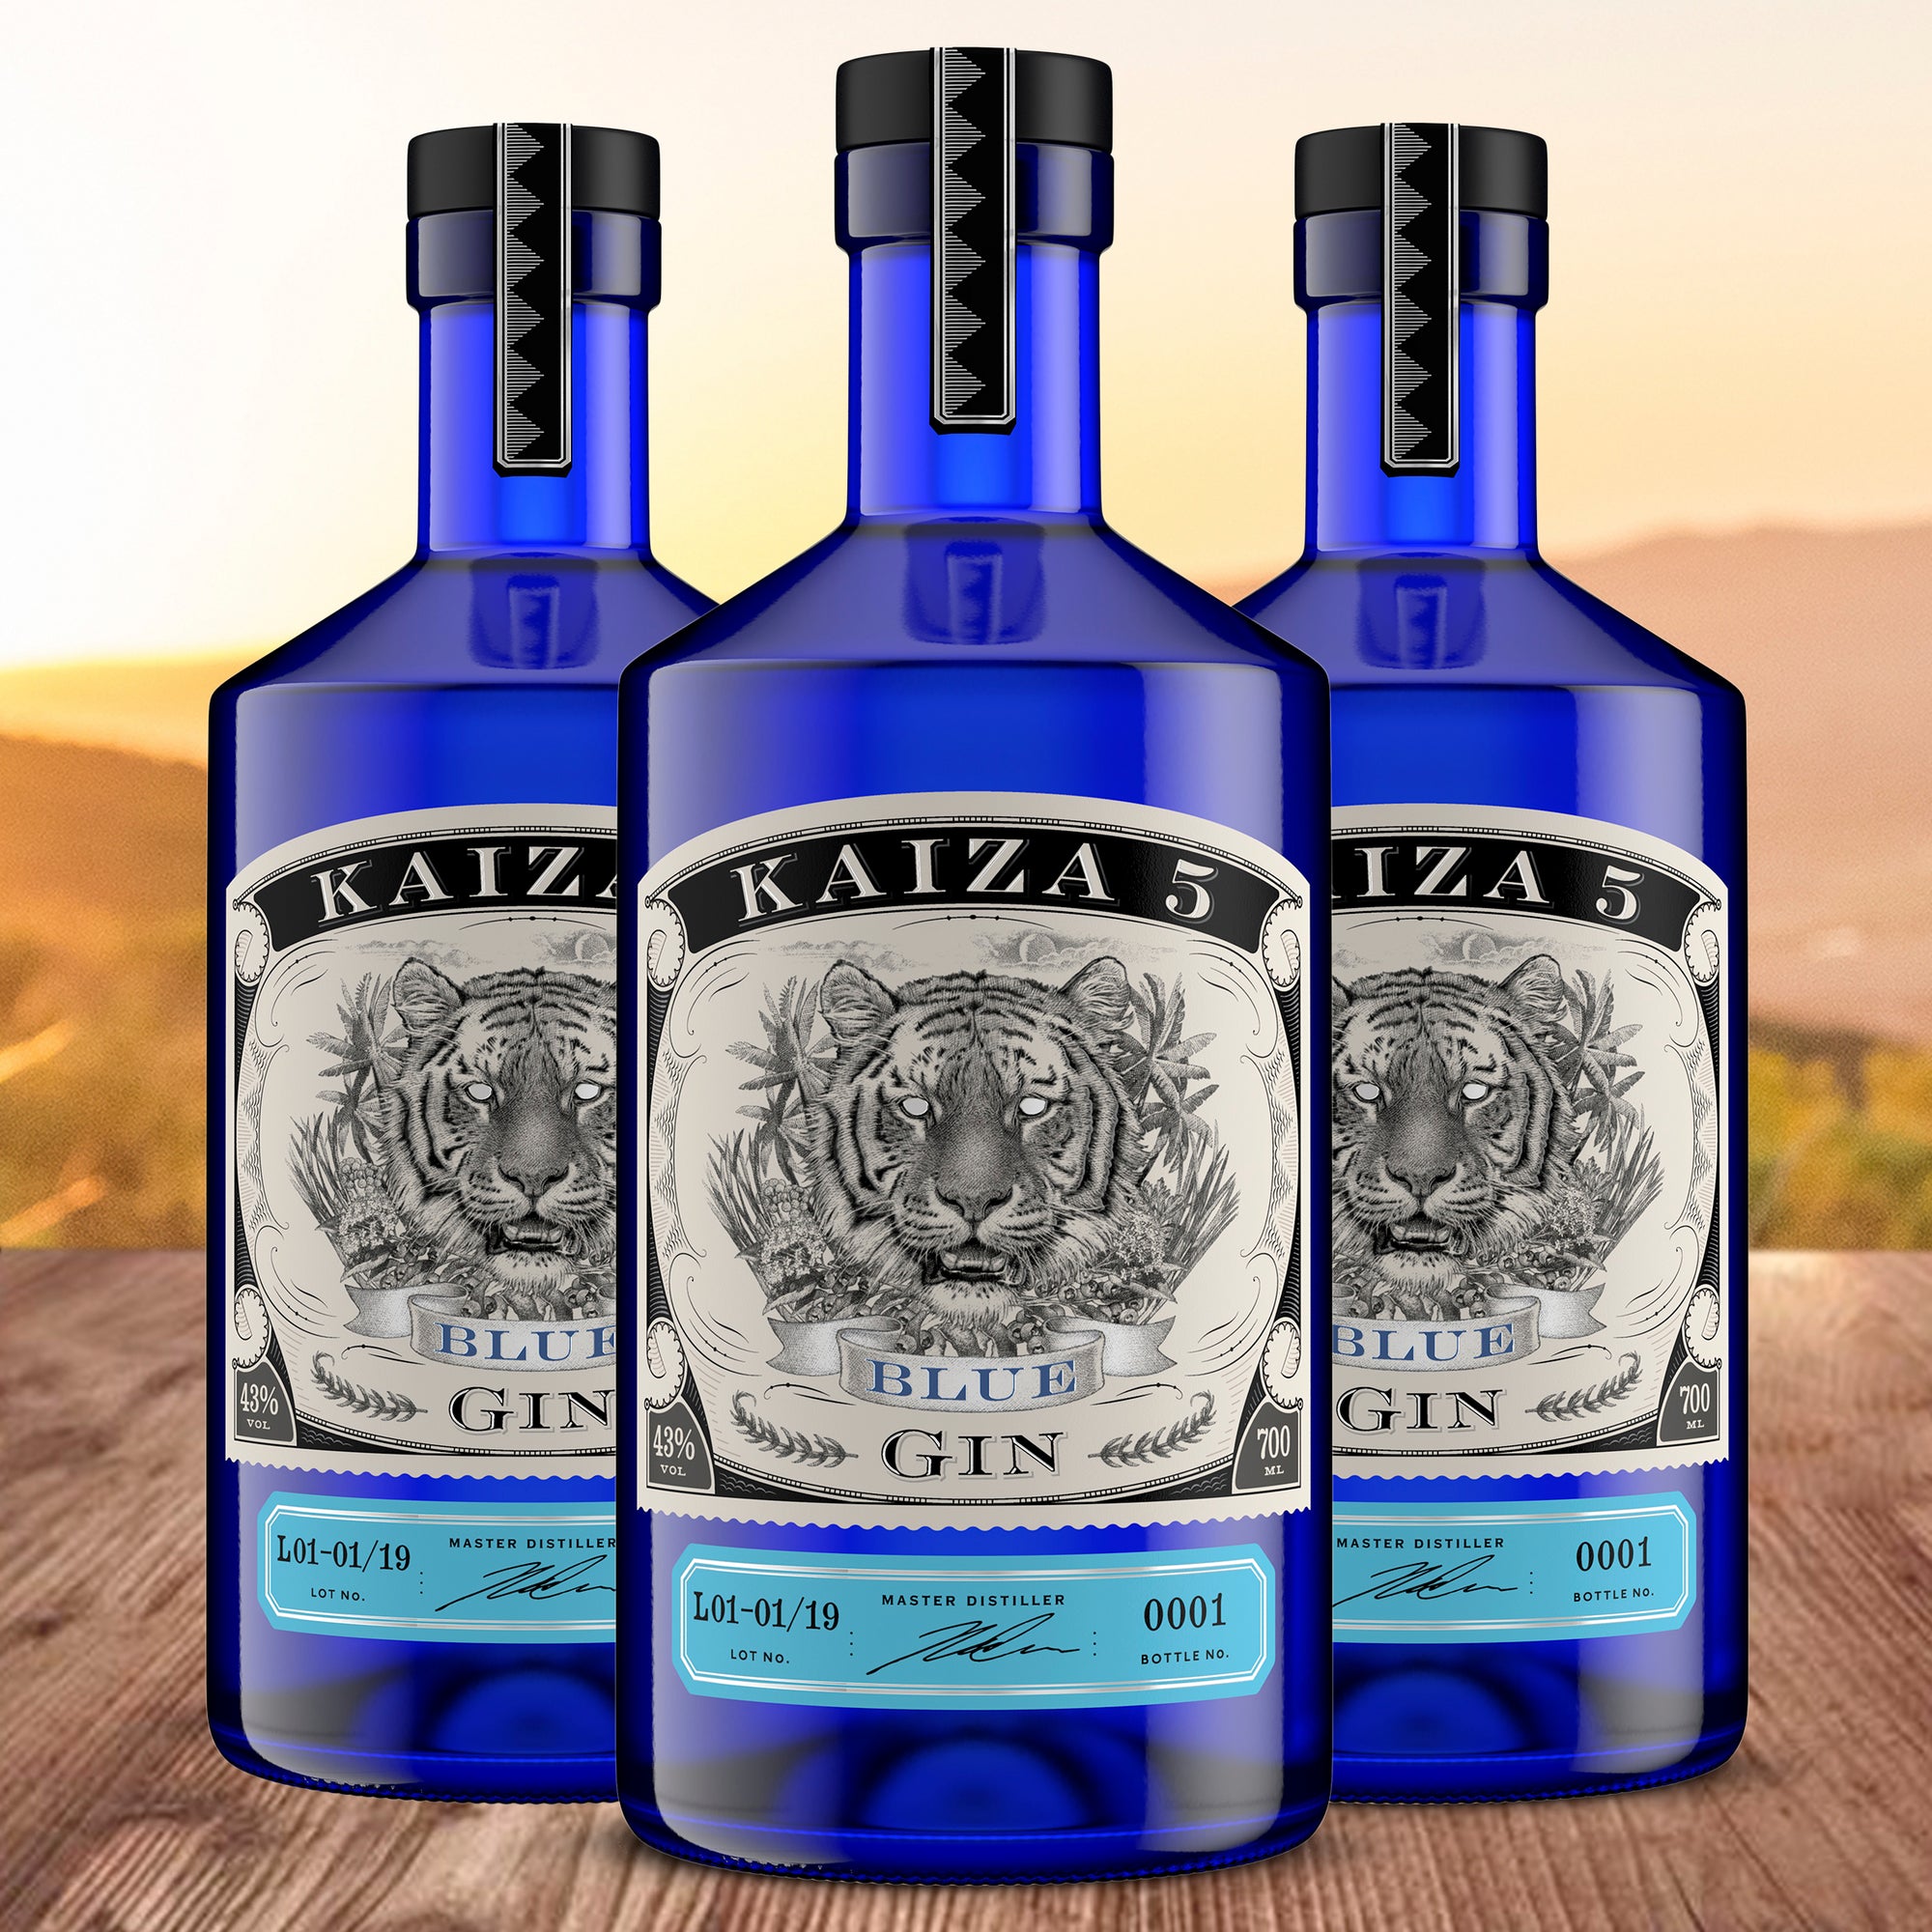 KAIZA 5 GIN BLUE - 43% | Der blaue Tiger aus Südafrika/Kapstadt